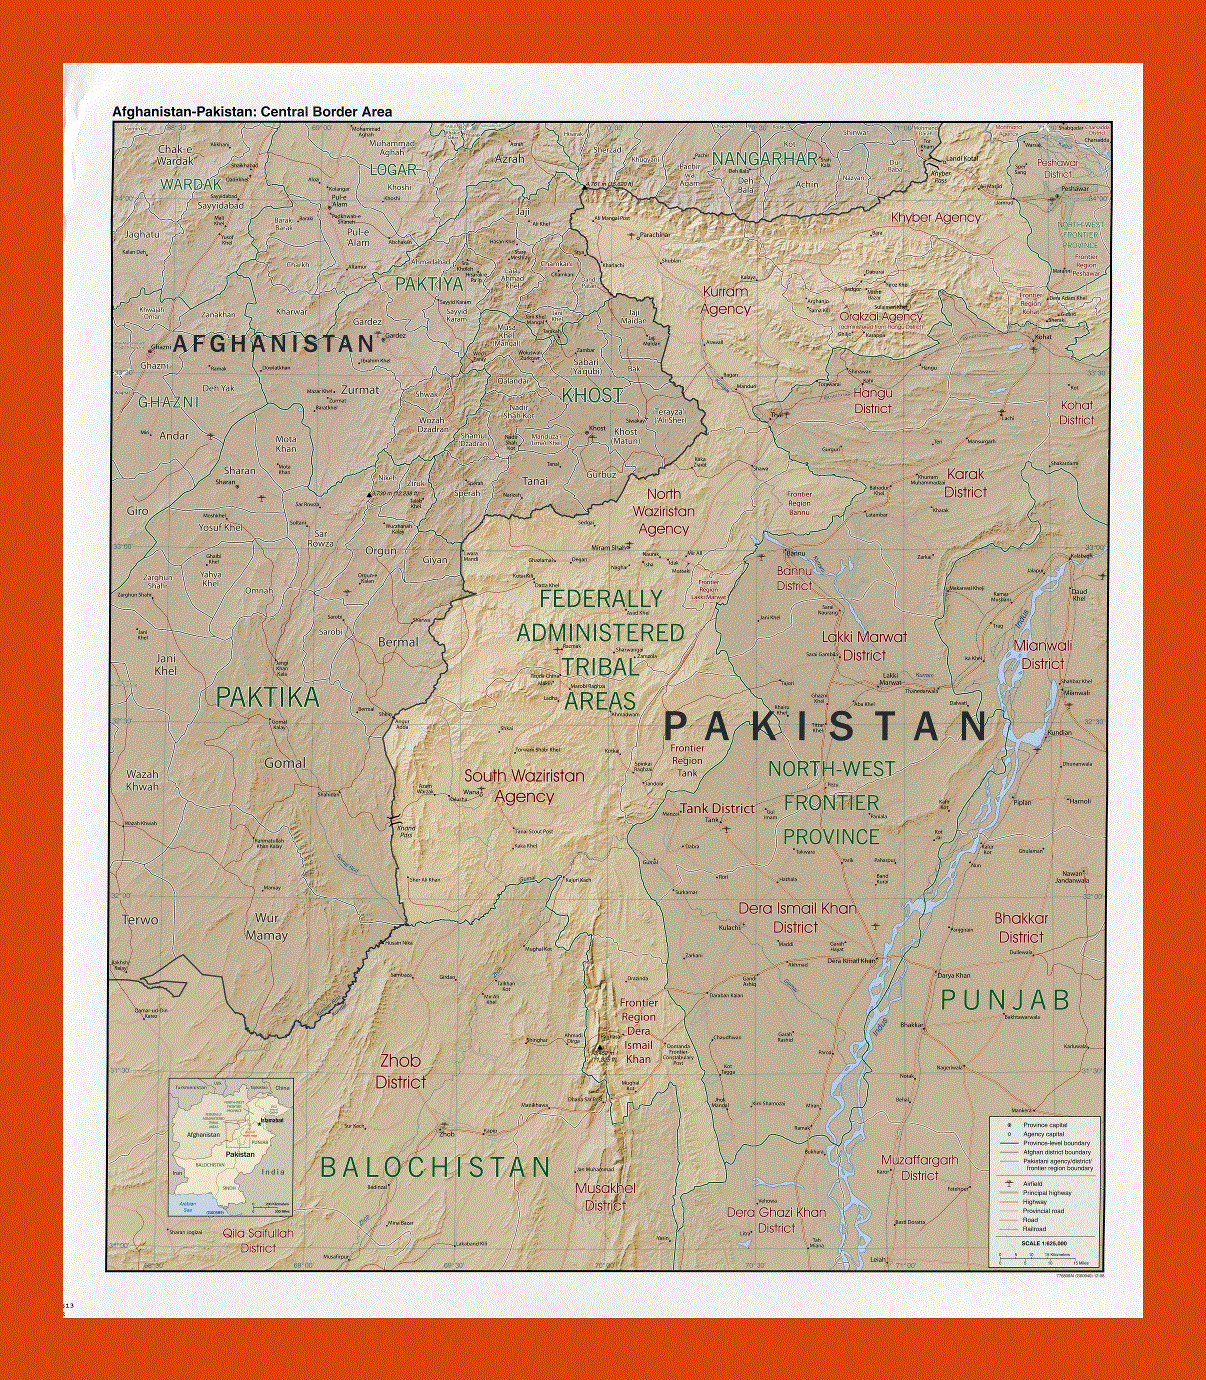 Afghanistan-Pakistan central border area map - 2008